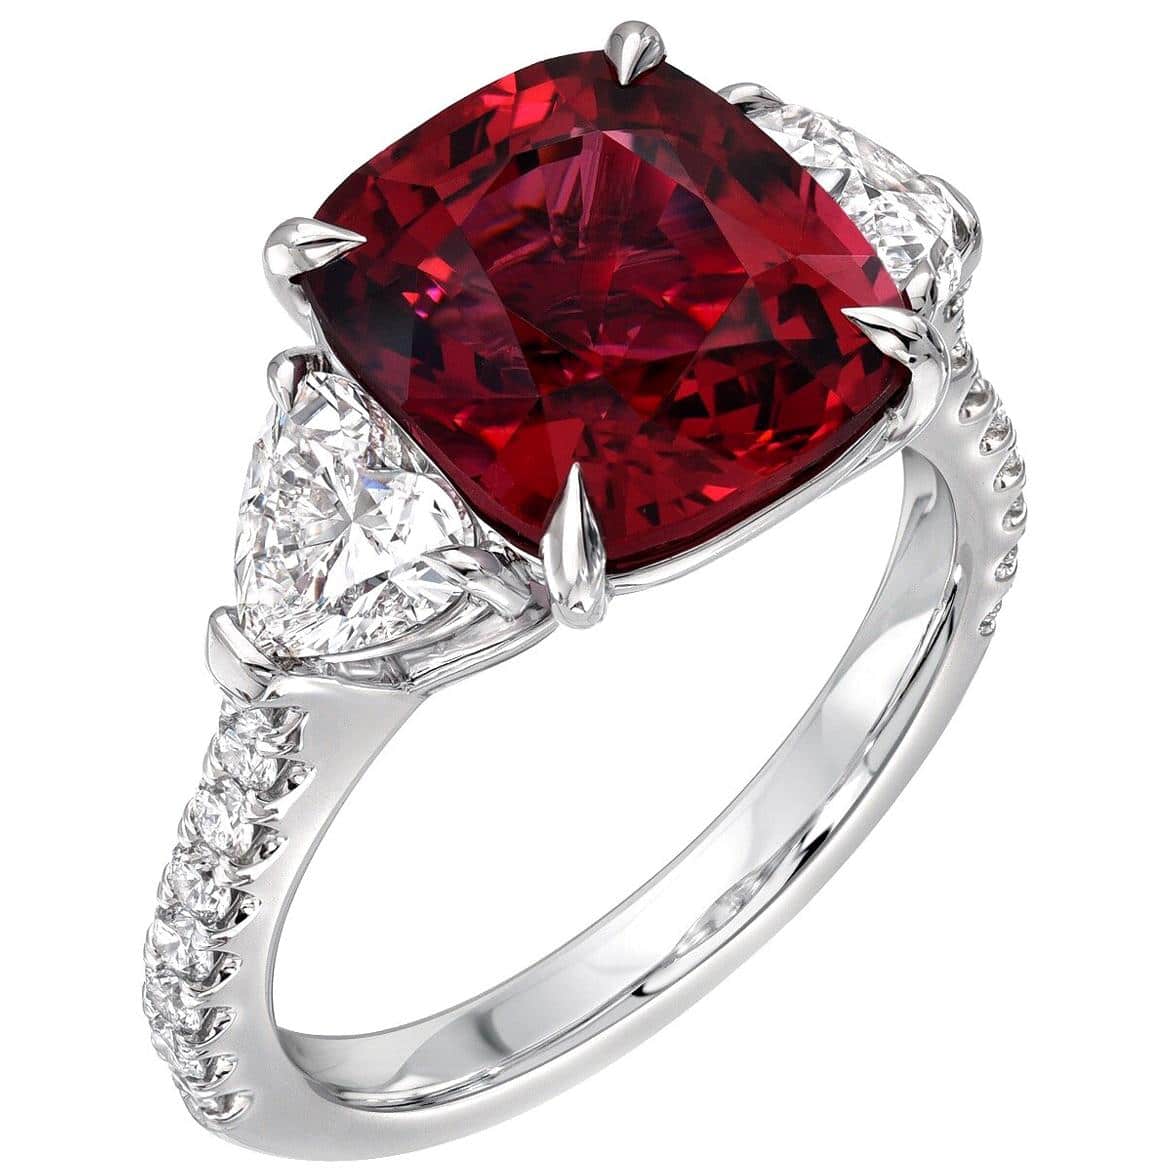 Burma Red Spinel Diamond Platinum Ring 5.05 Carat - Merkaba Jewelry